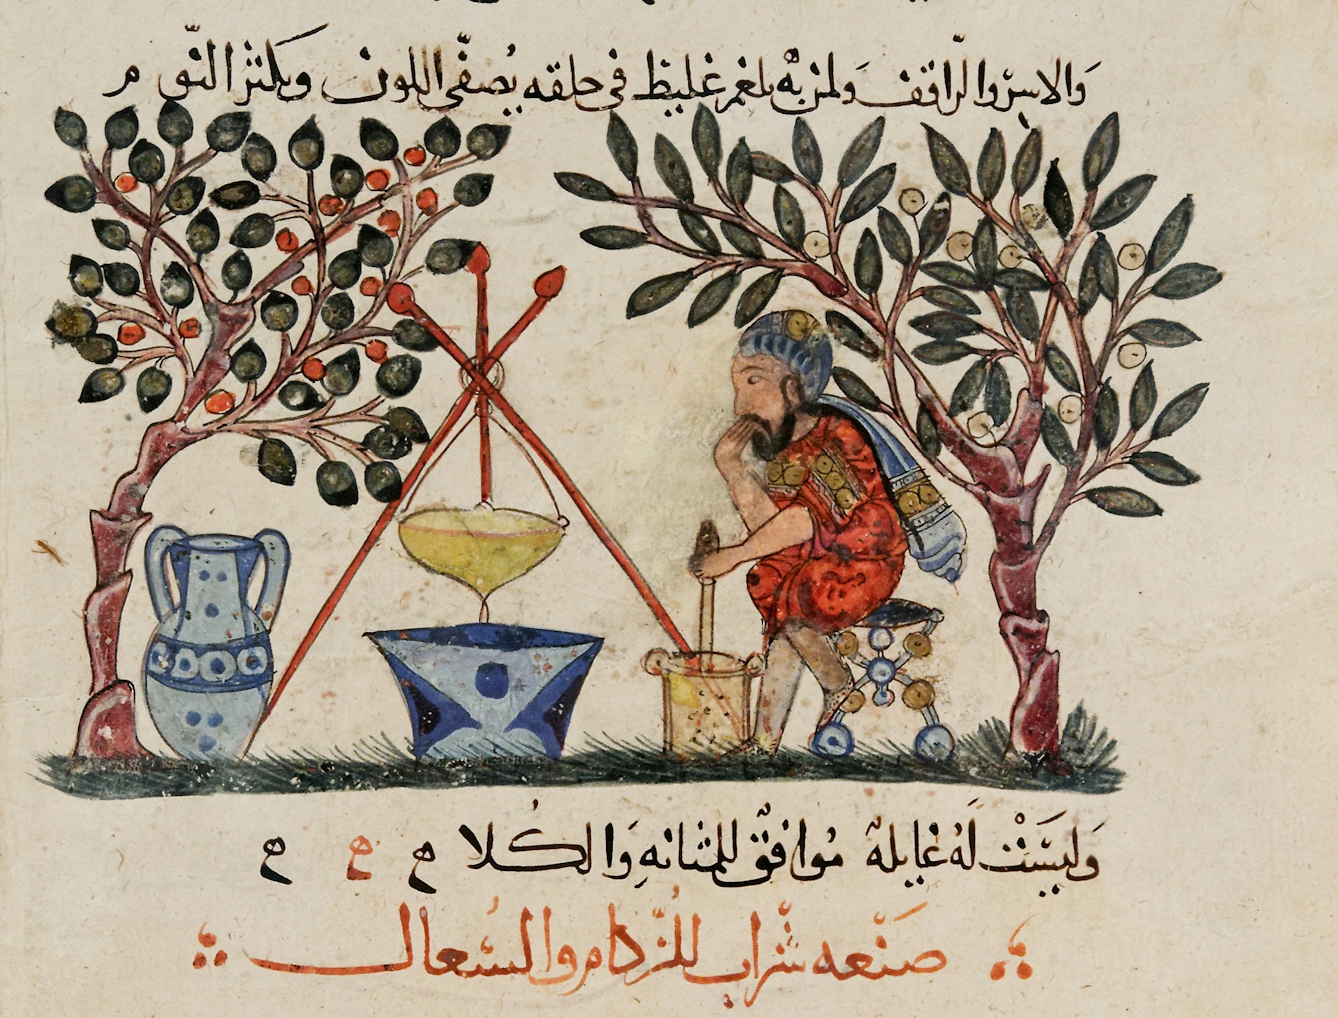 Physician preparing an elixir